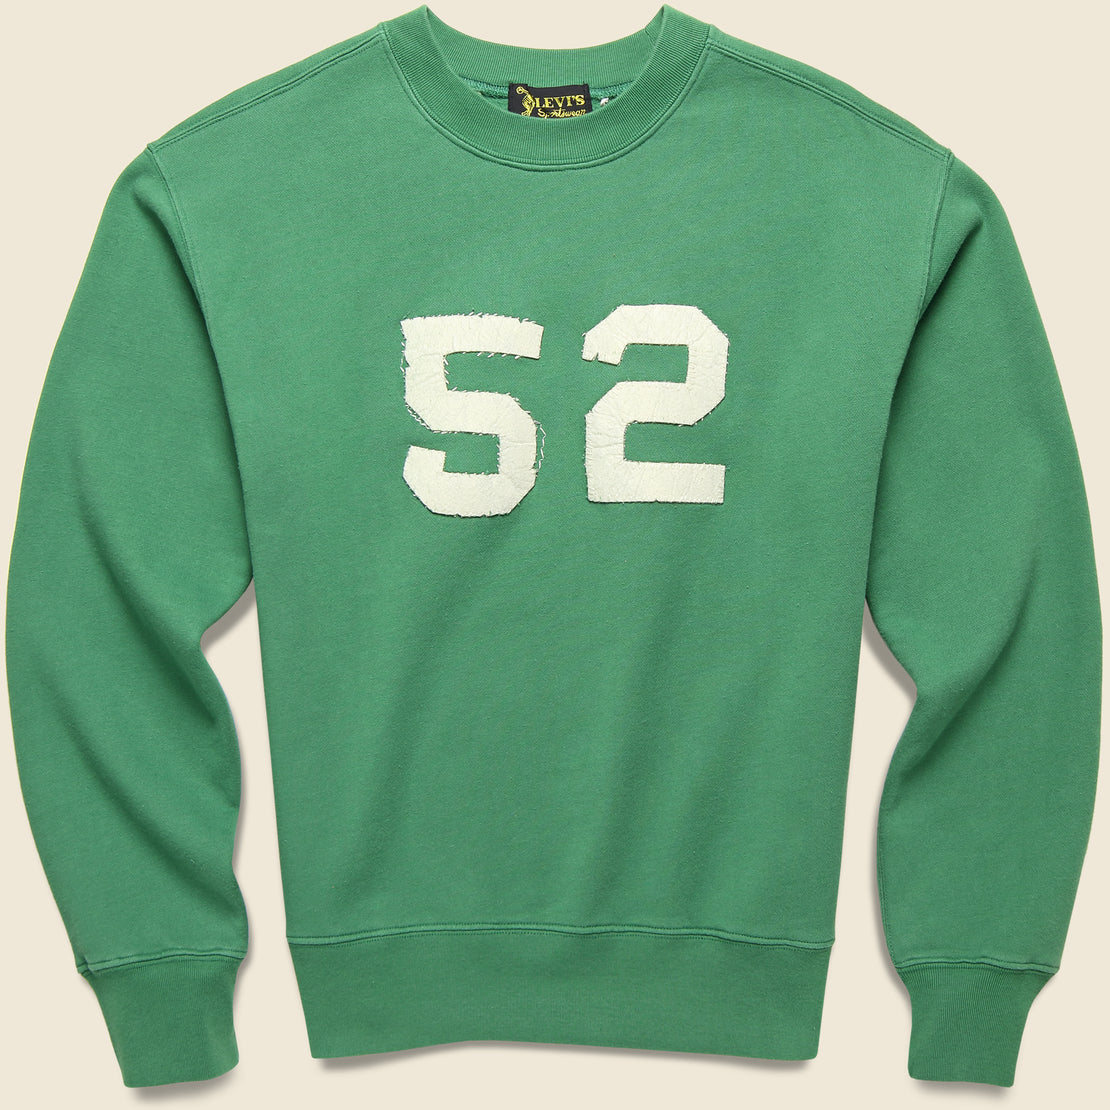 Levis Vintage Clothing 60s Varsity Sweatshirt - Fairway